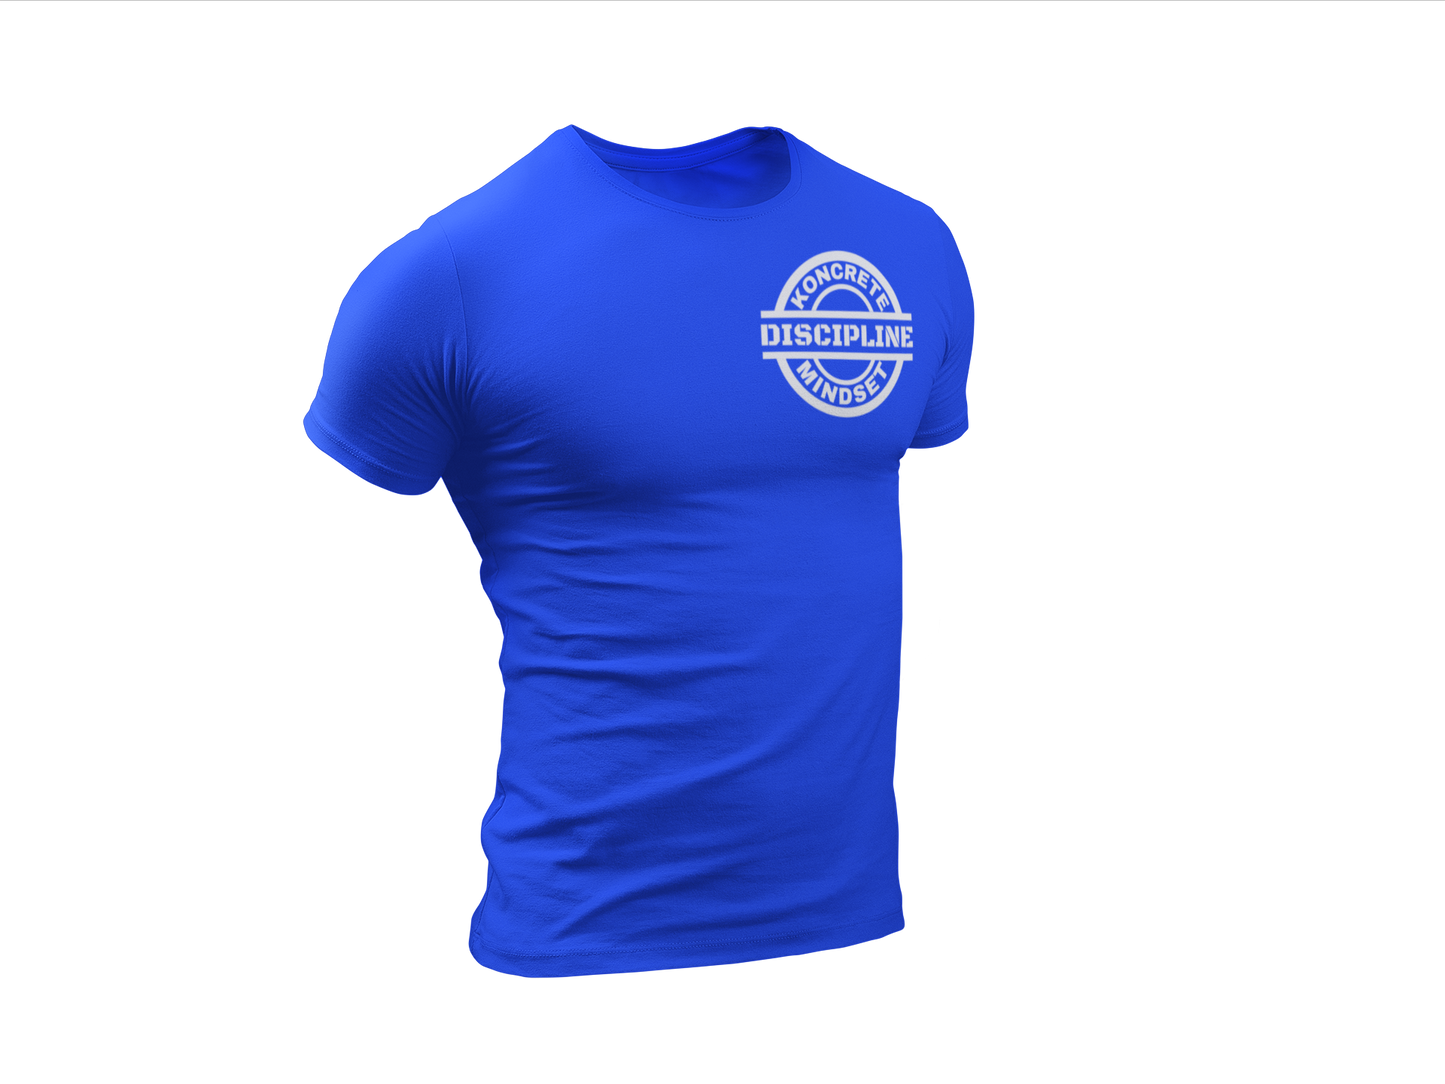 royal blue Koncrete Mindset discipline t-shirt with white design on left chest  